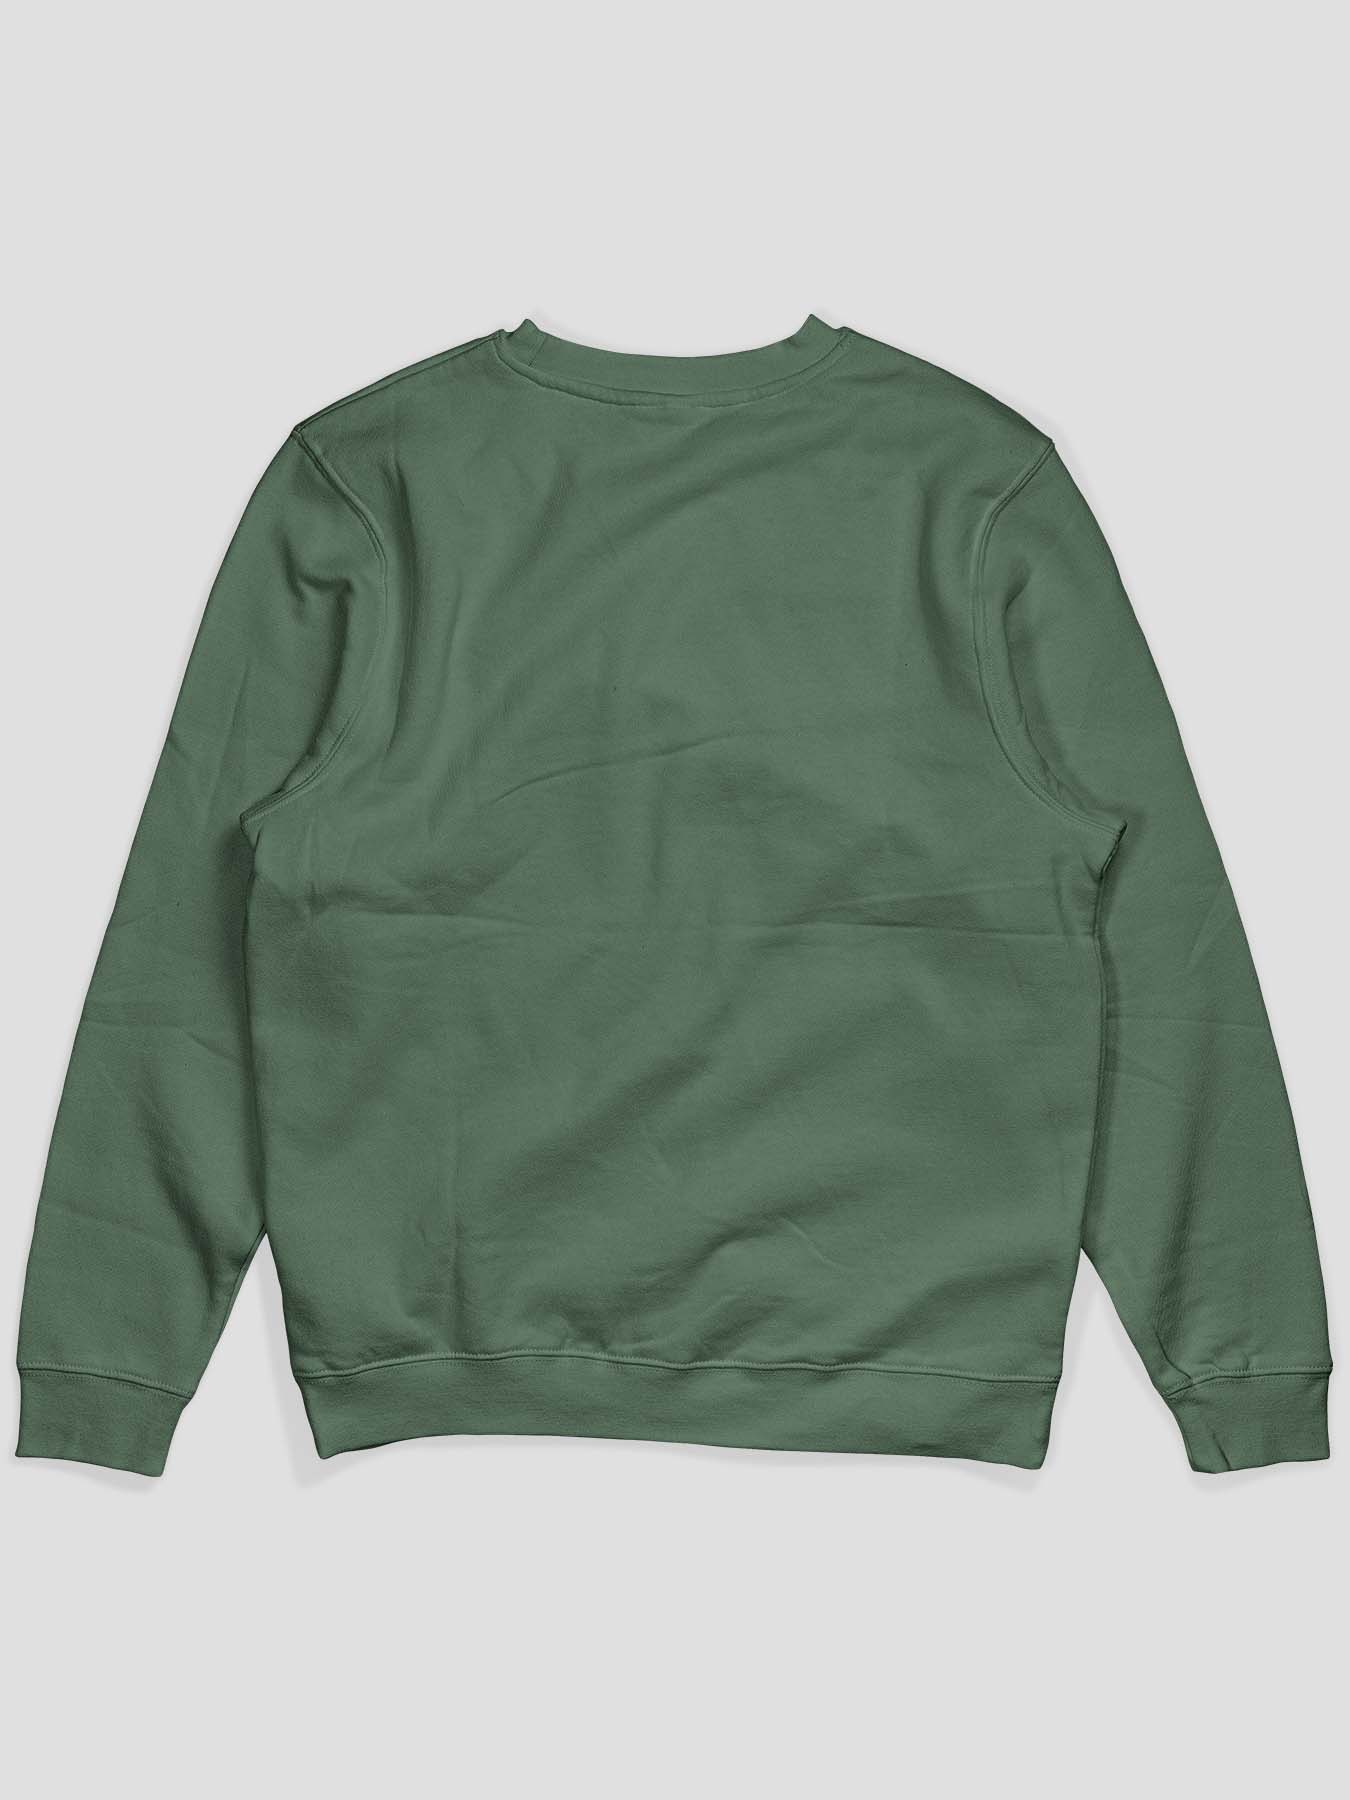 Essential Crewneck Sweatshirt - Sage - keos.life